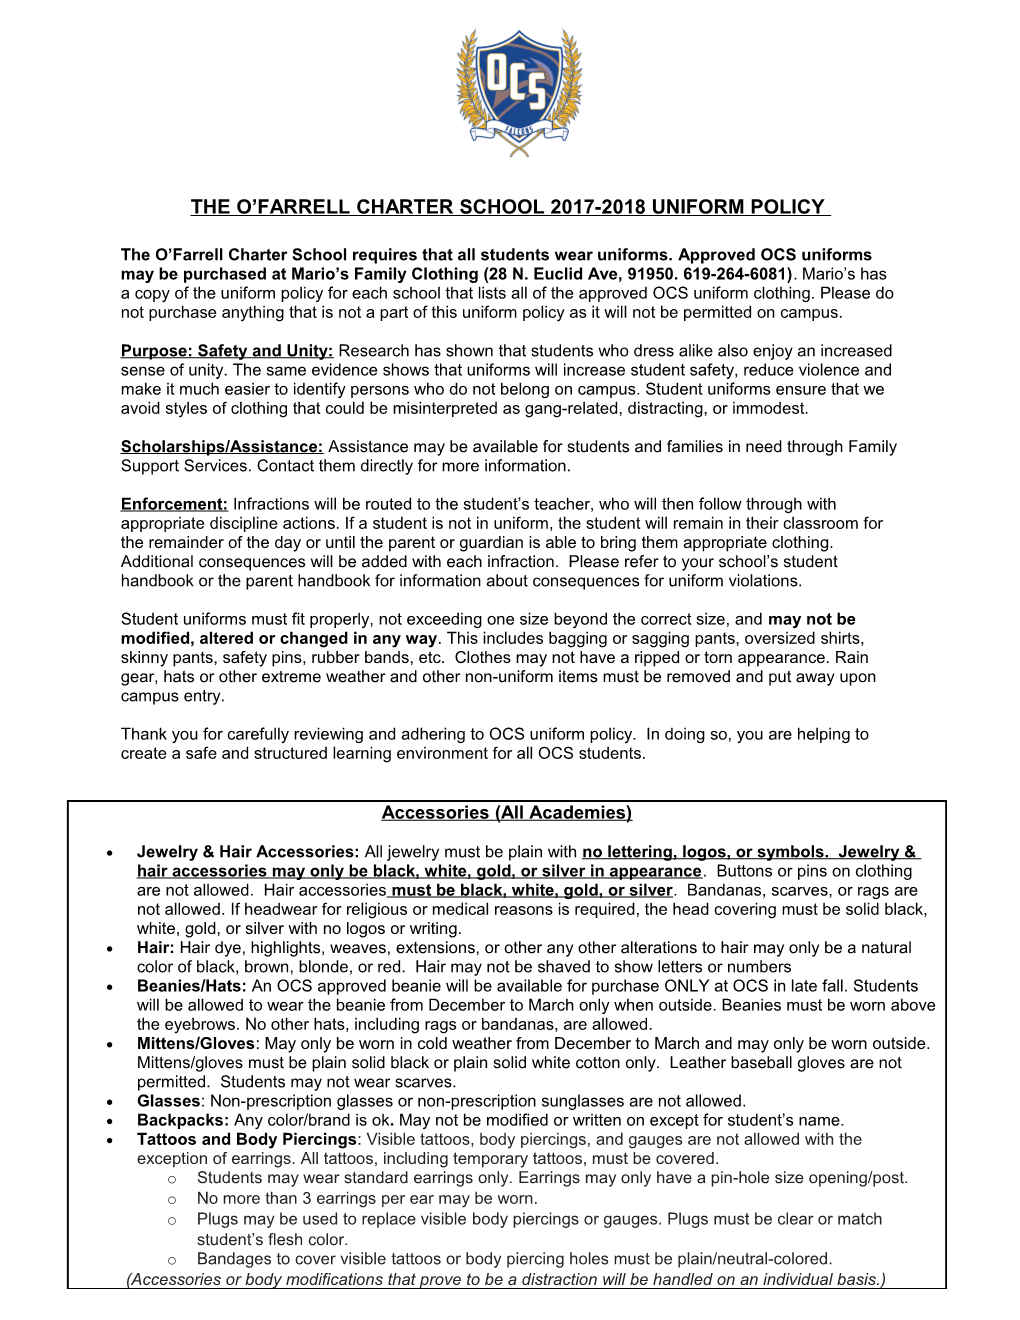 2002-2003 School Uniform Policy